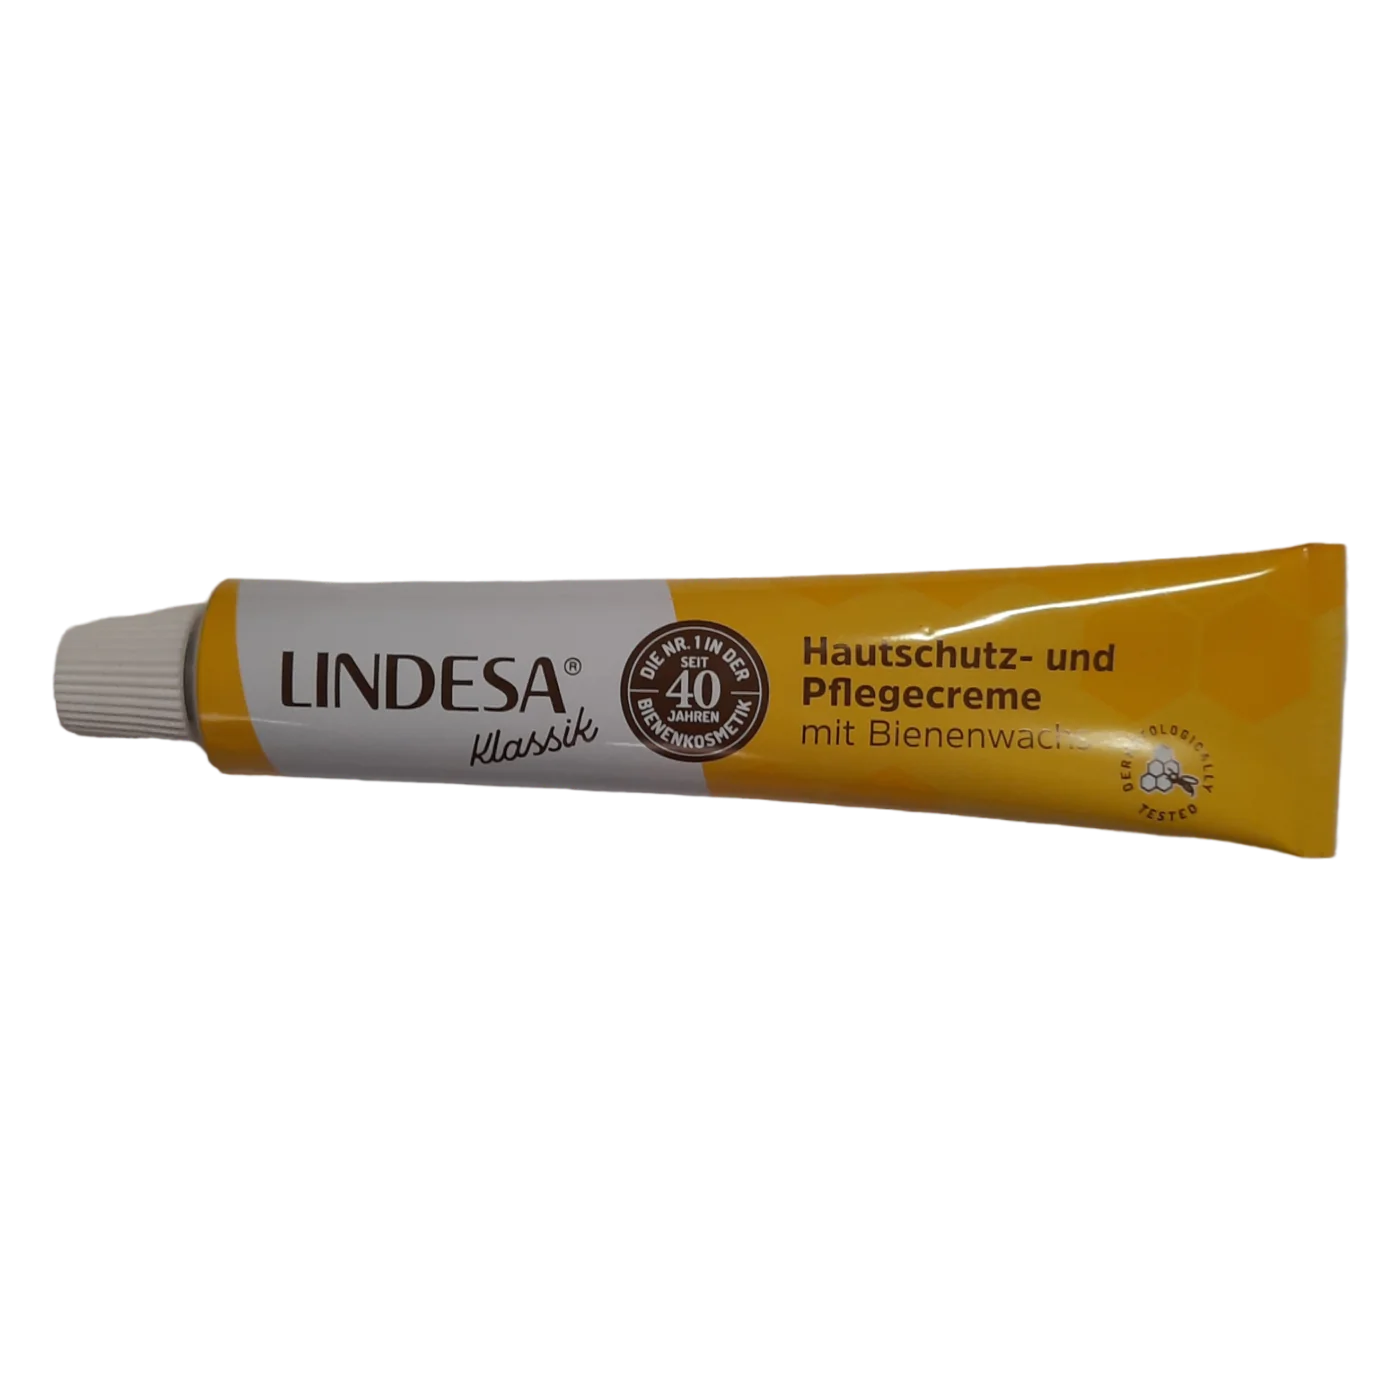 Lindesa - Klassik (gelb)